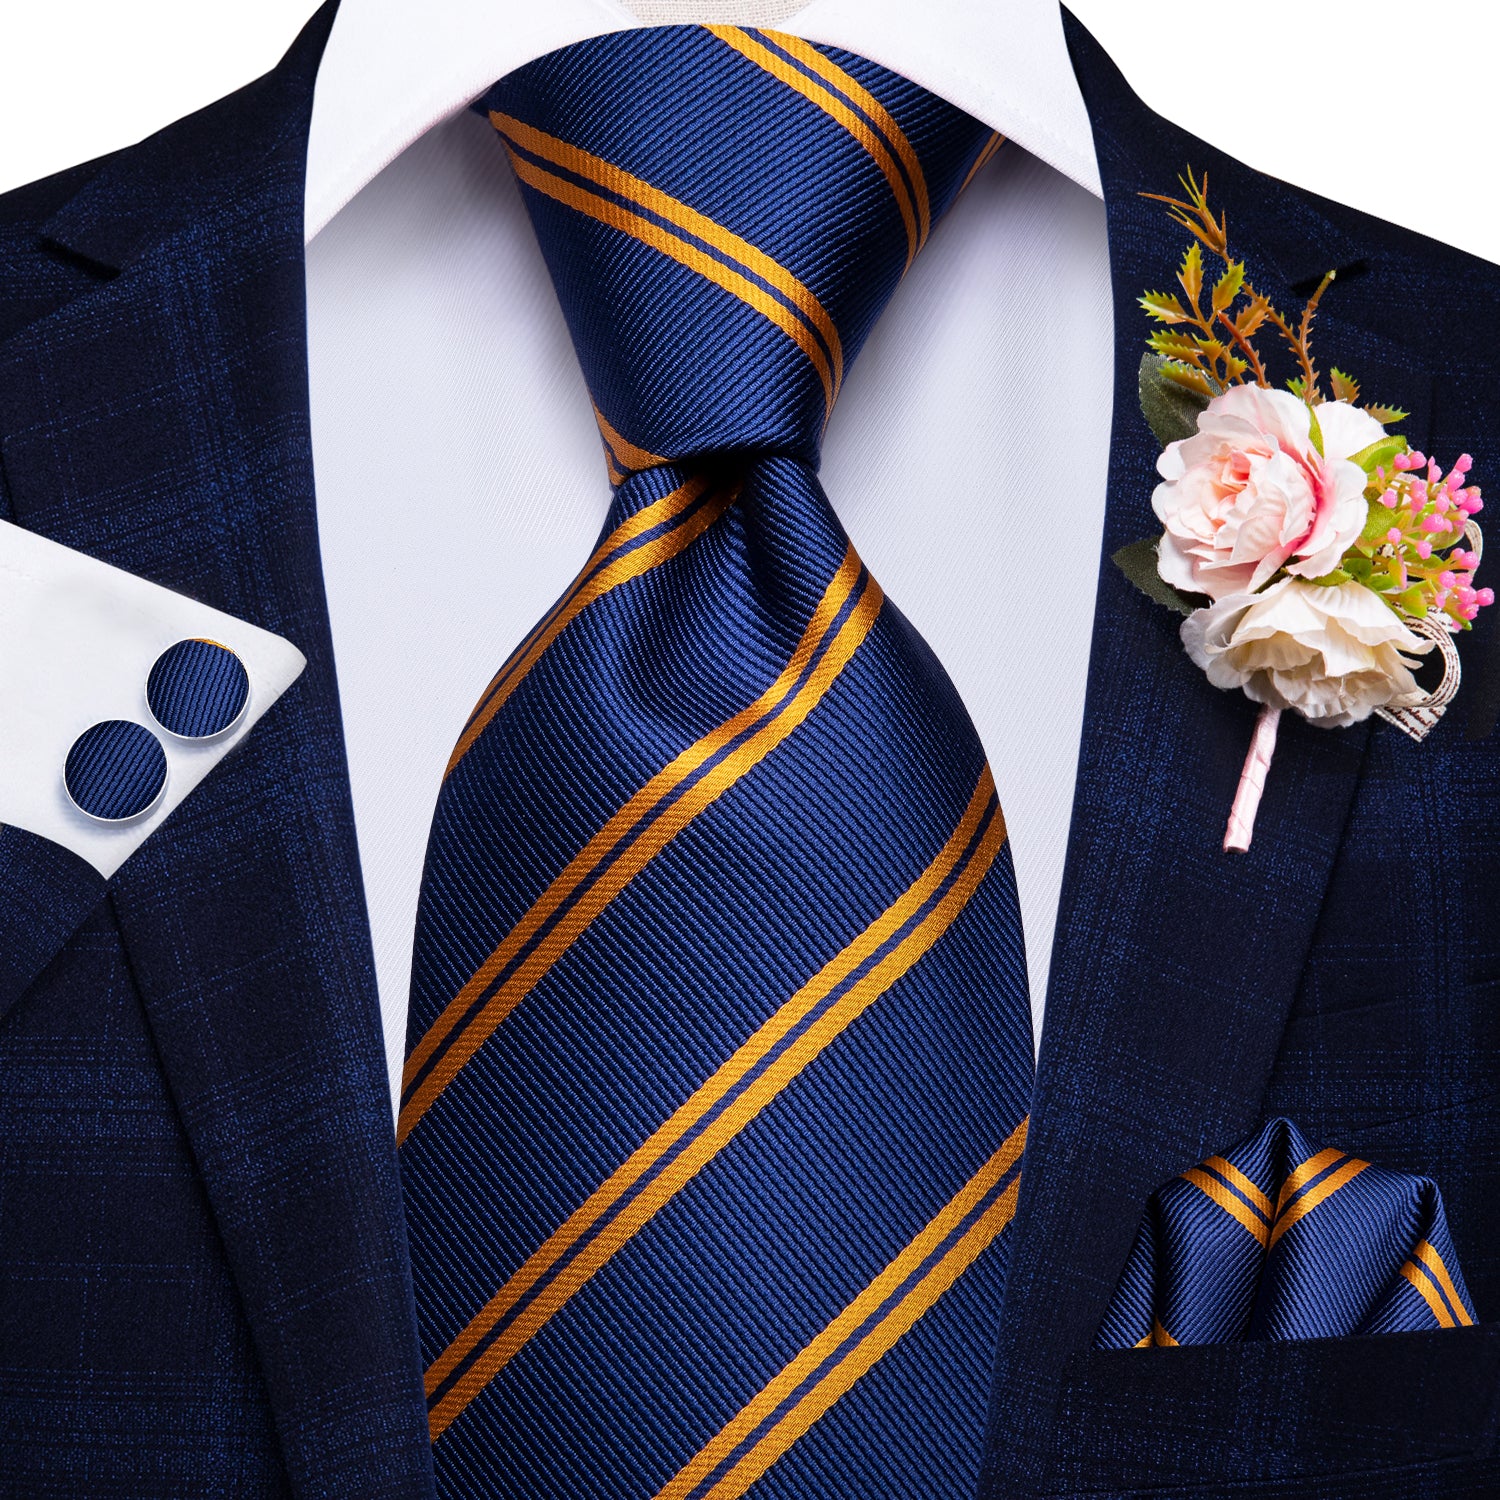 Shining Blue Yellow Striped Tie Handkerchief Cufflinks Set with Wedding Brooch